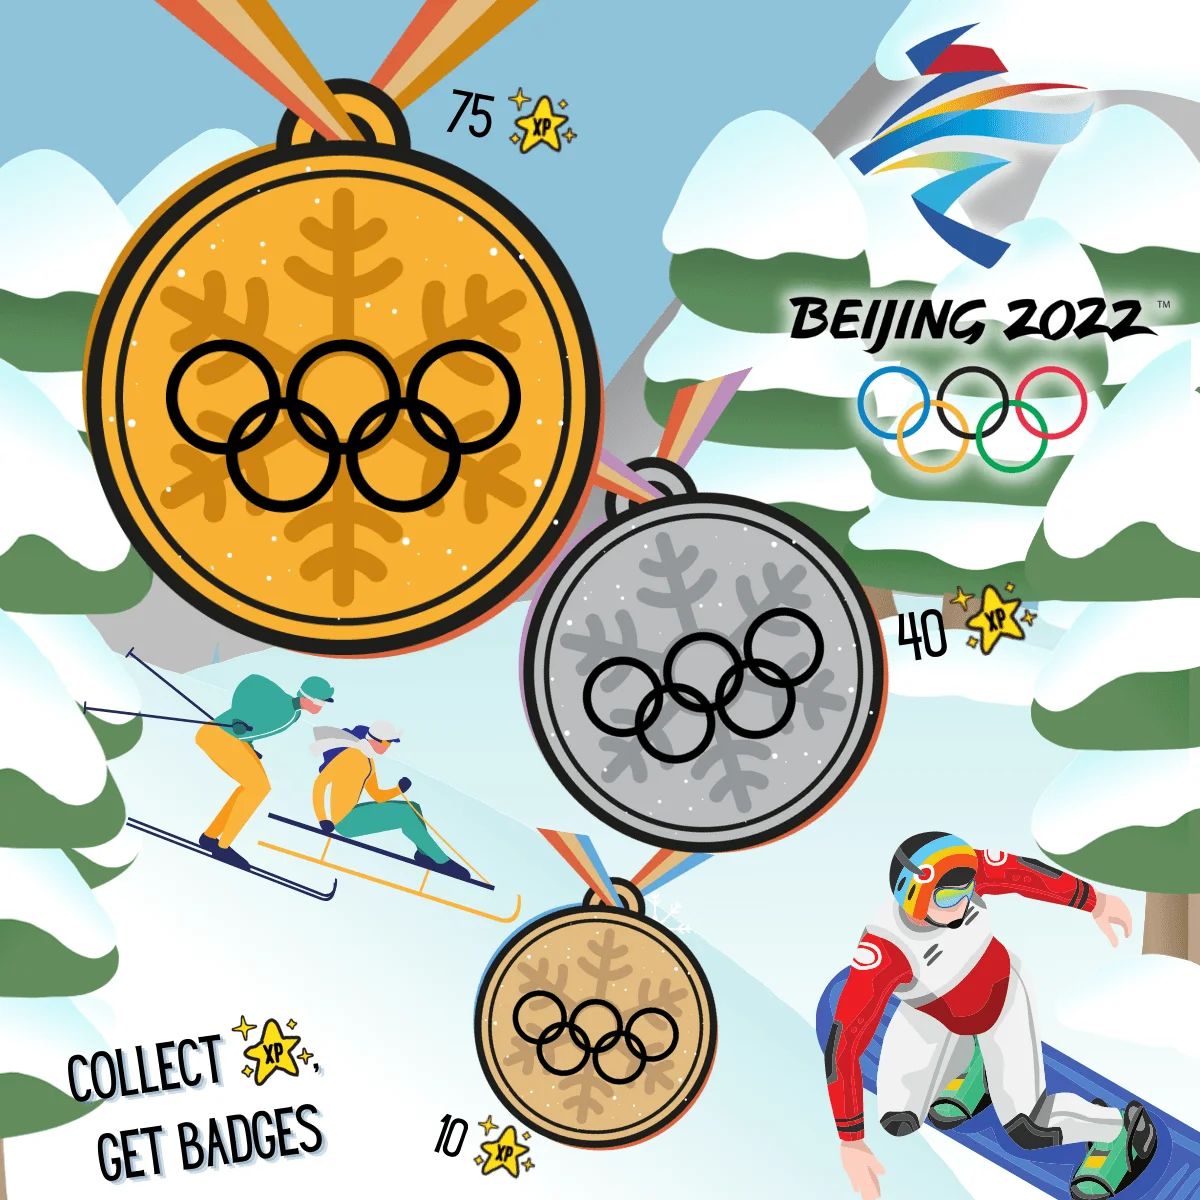 We declare the Winter Olympics 2022, open!